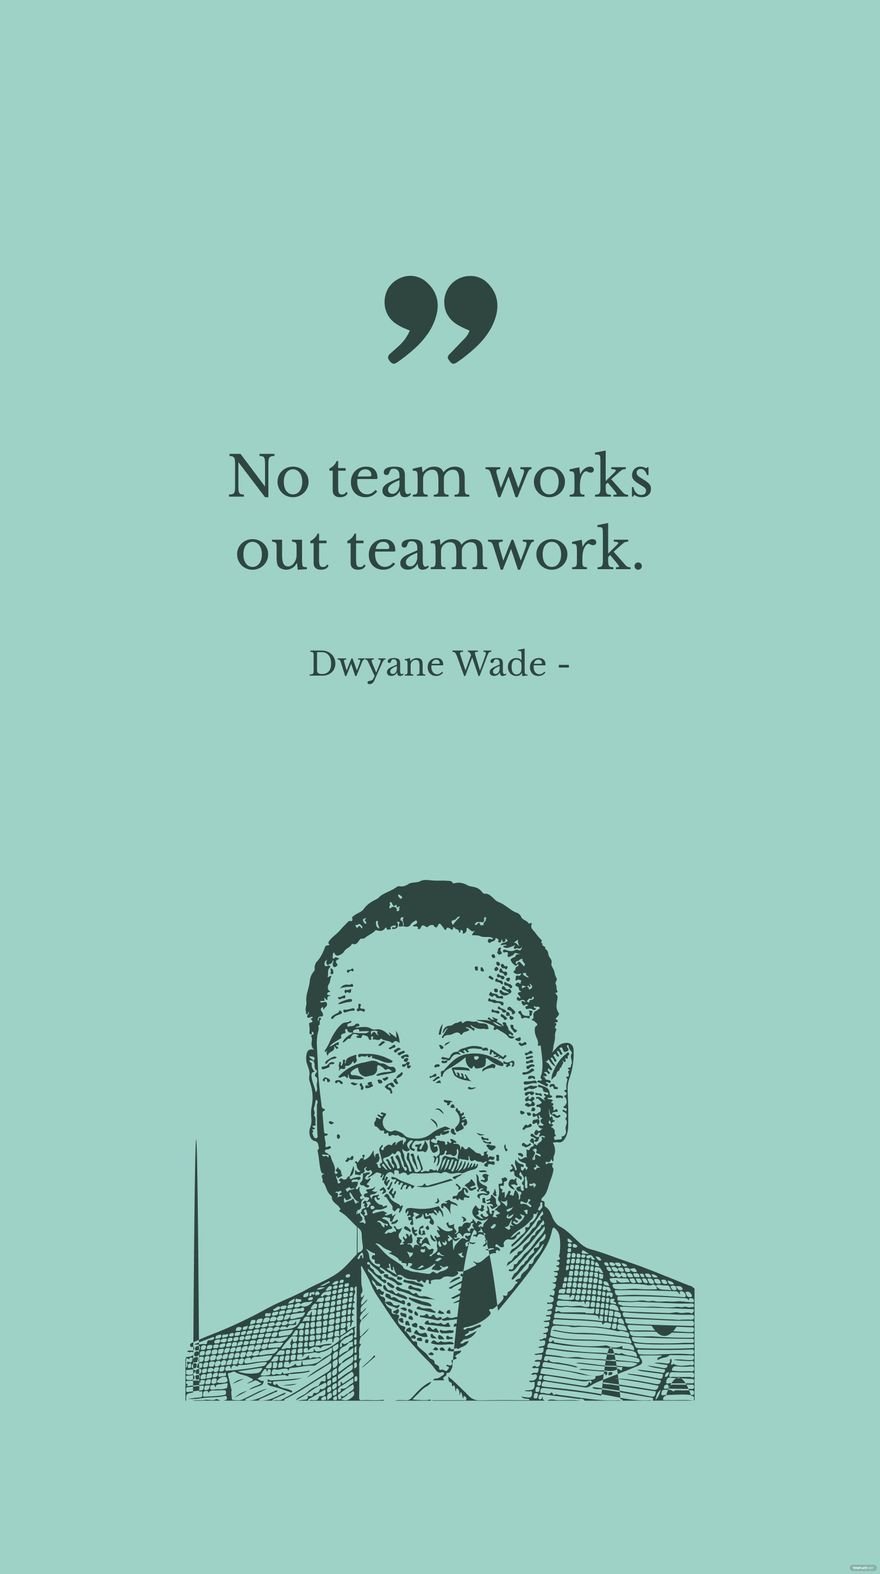 Free Dwyane Wade - No team works out teamwork. in JPG